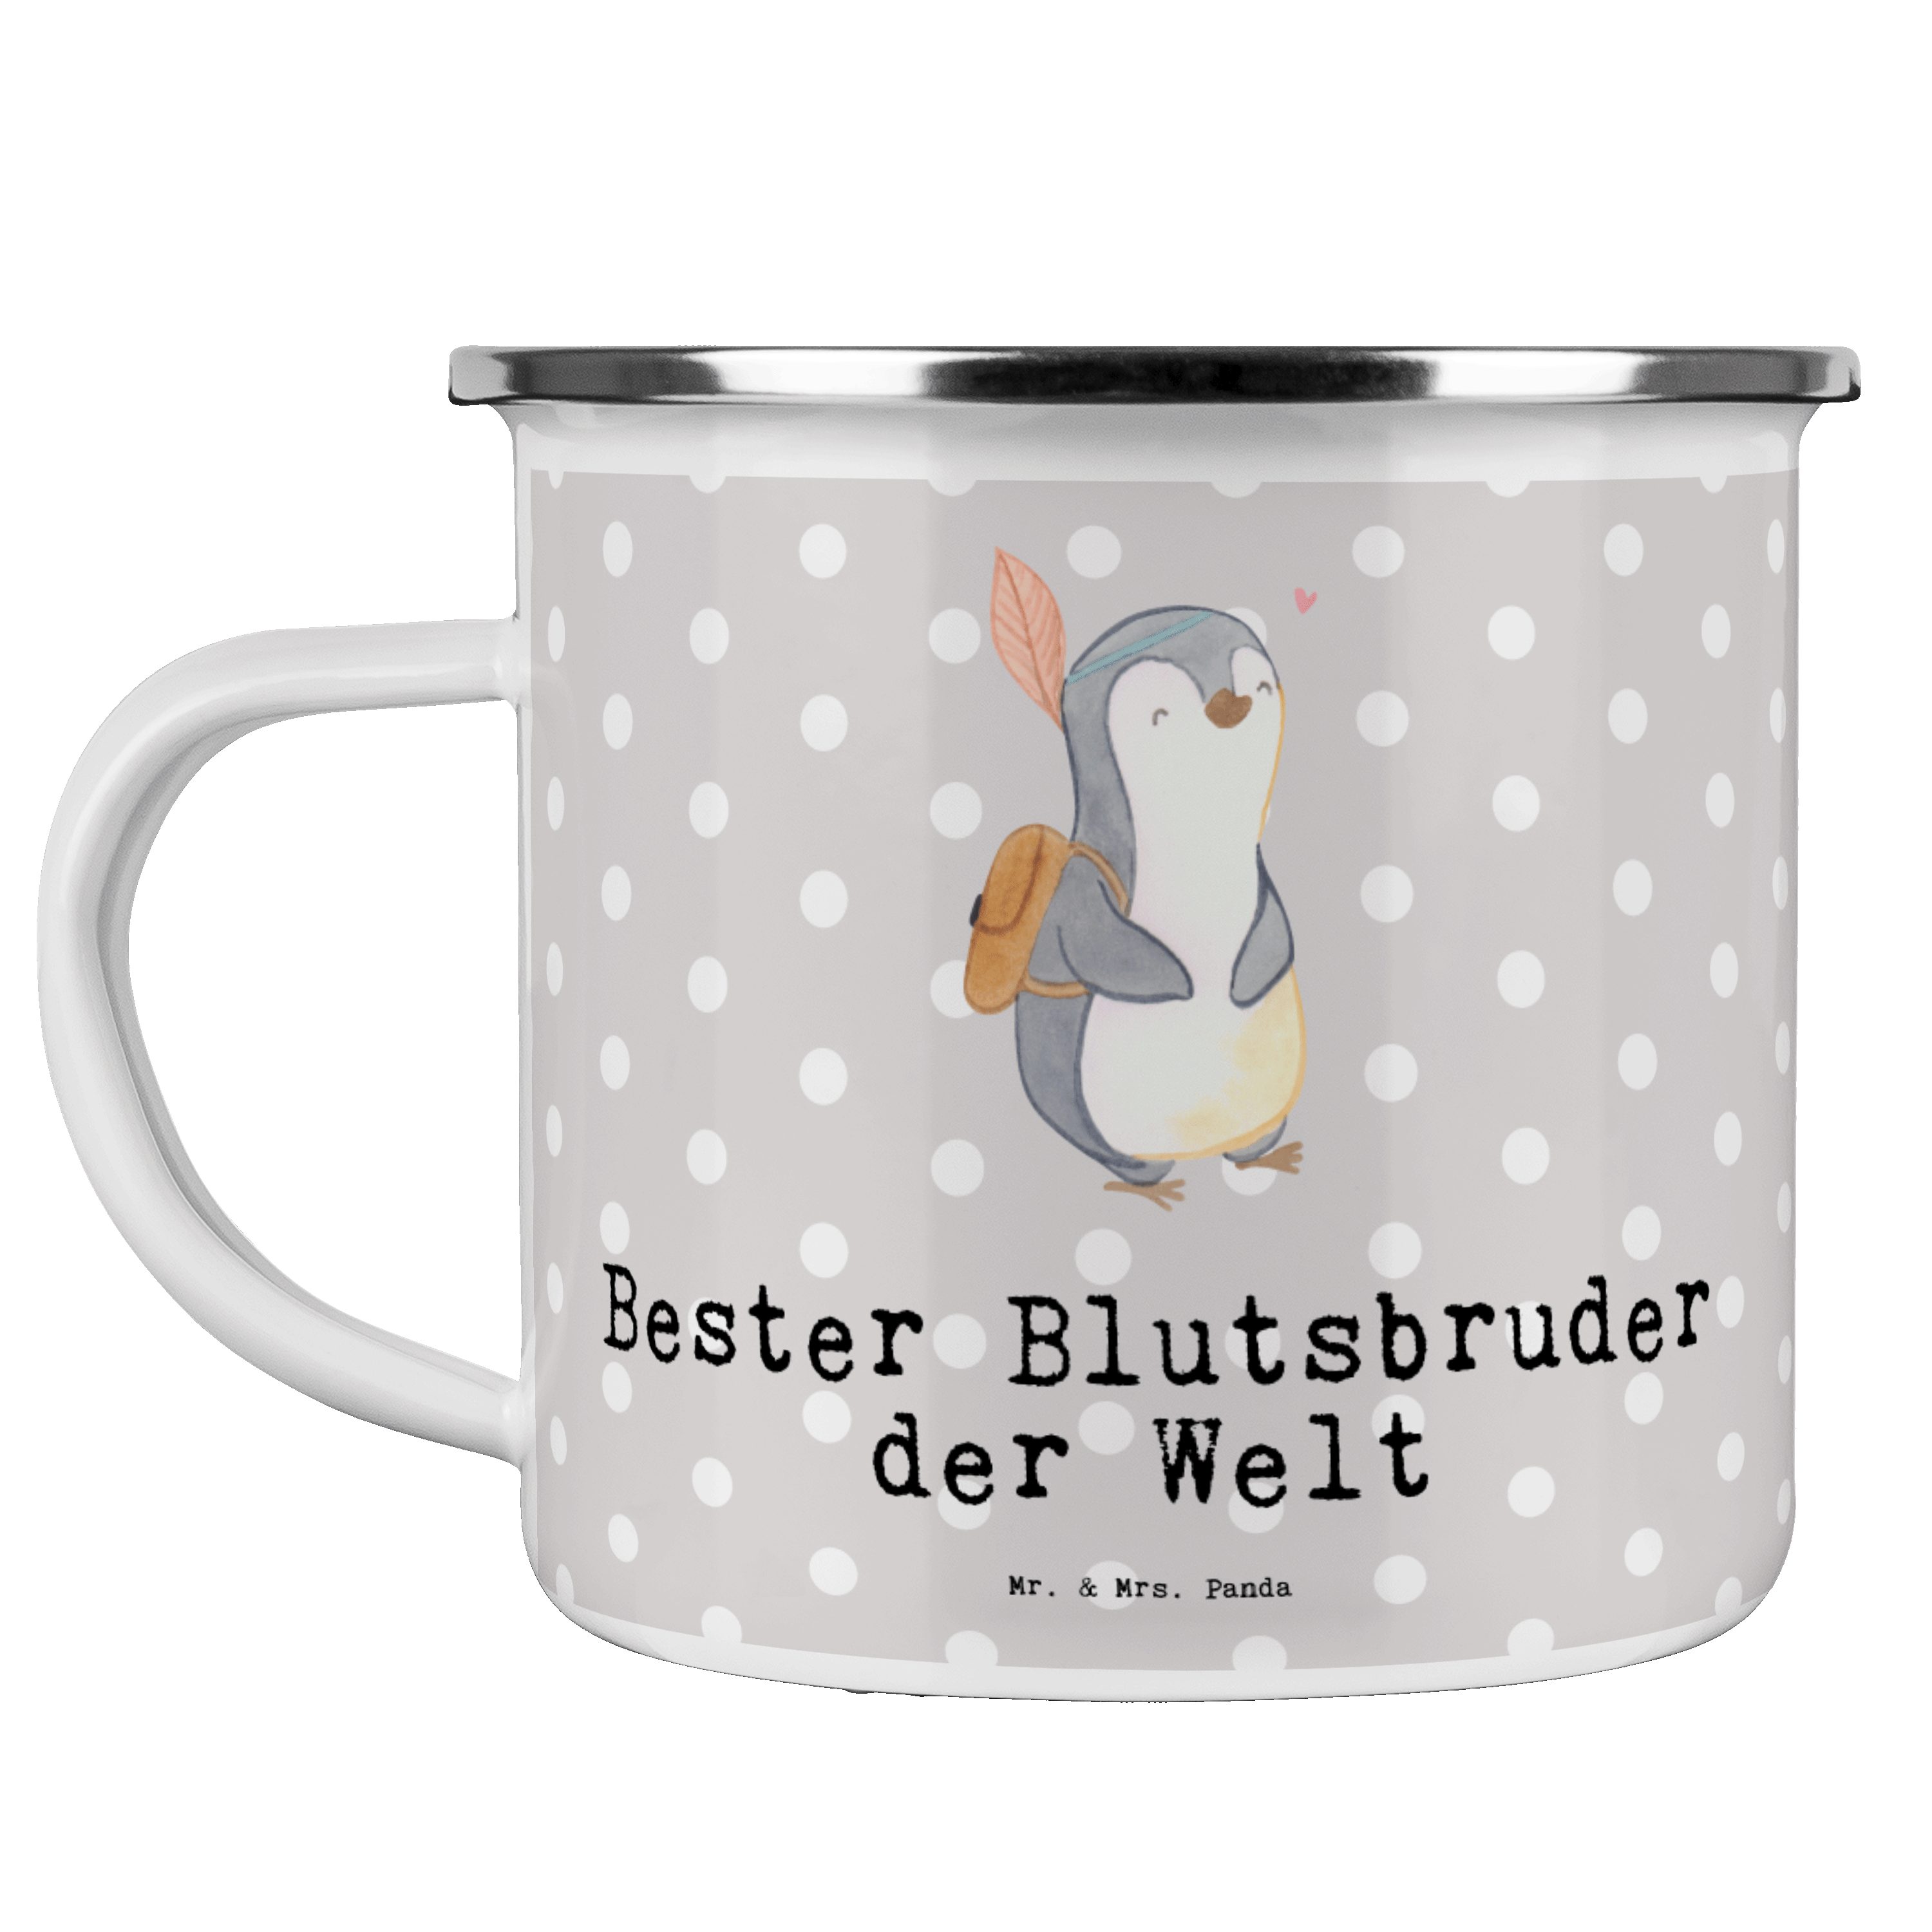 Mr. & Mrs. Panda Becher Pinguin Bester Blutsbruder der Welt - Grau Pastell - Geschenk, Emaill, Emaille